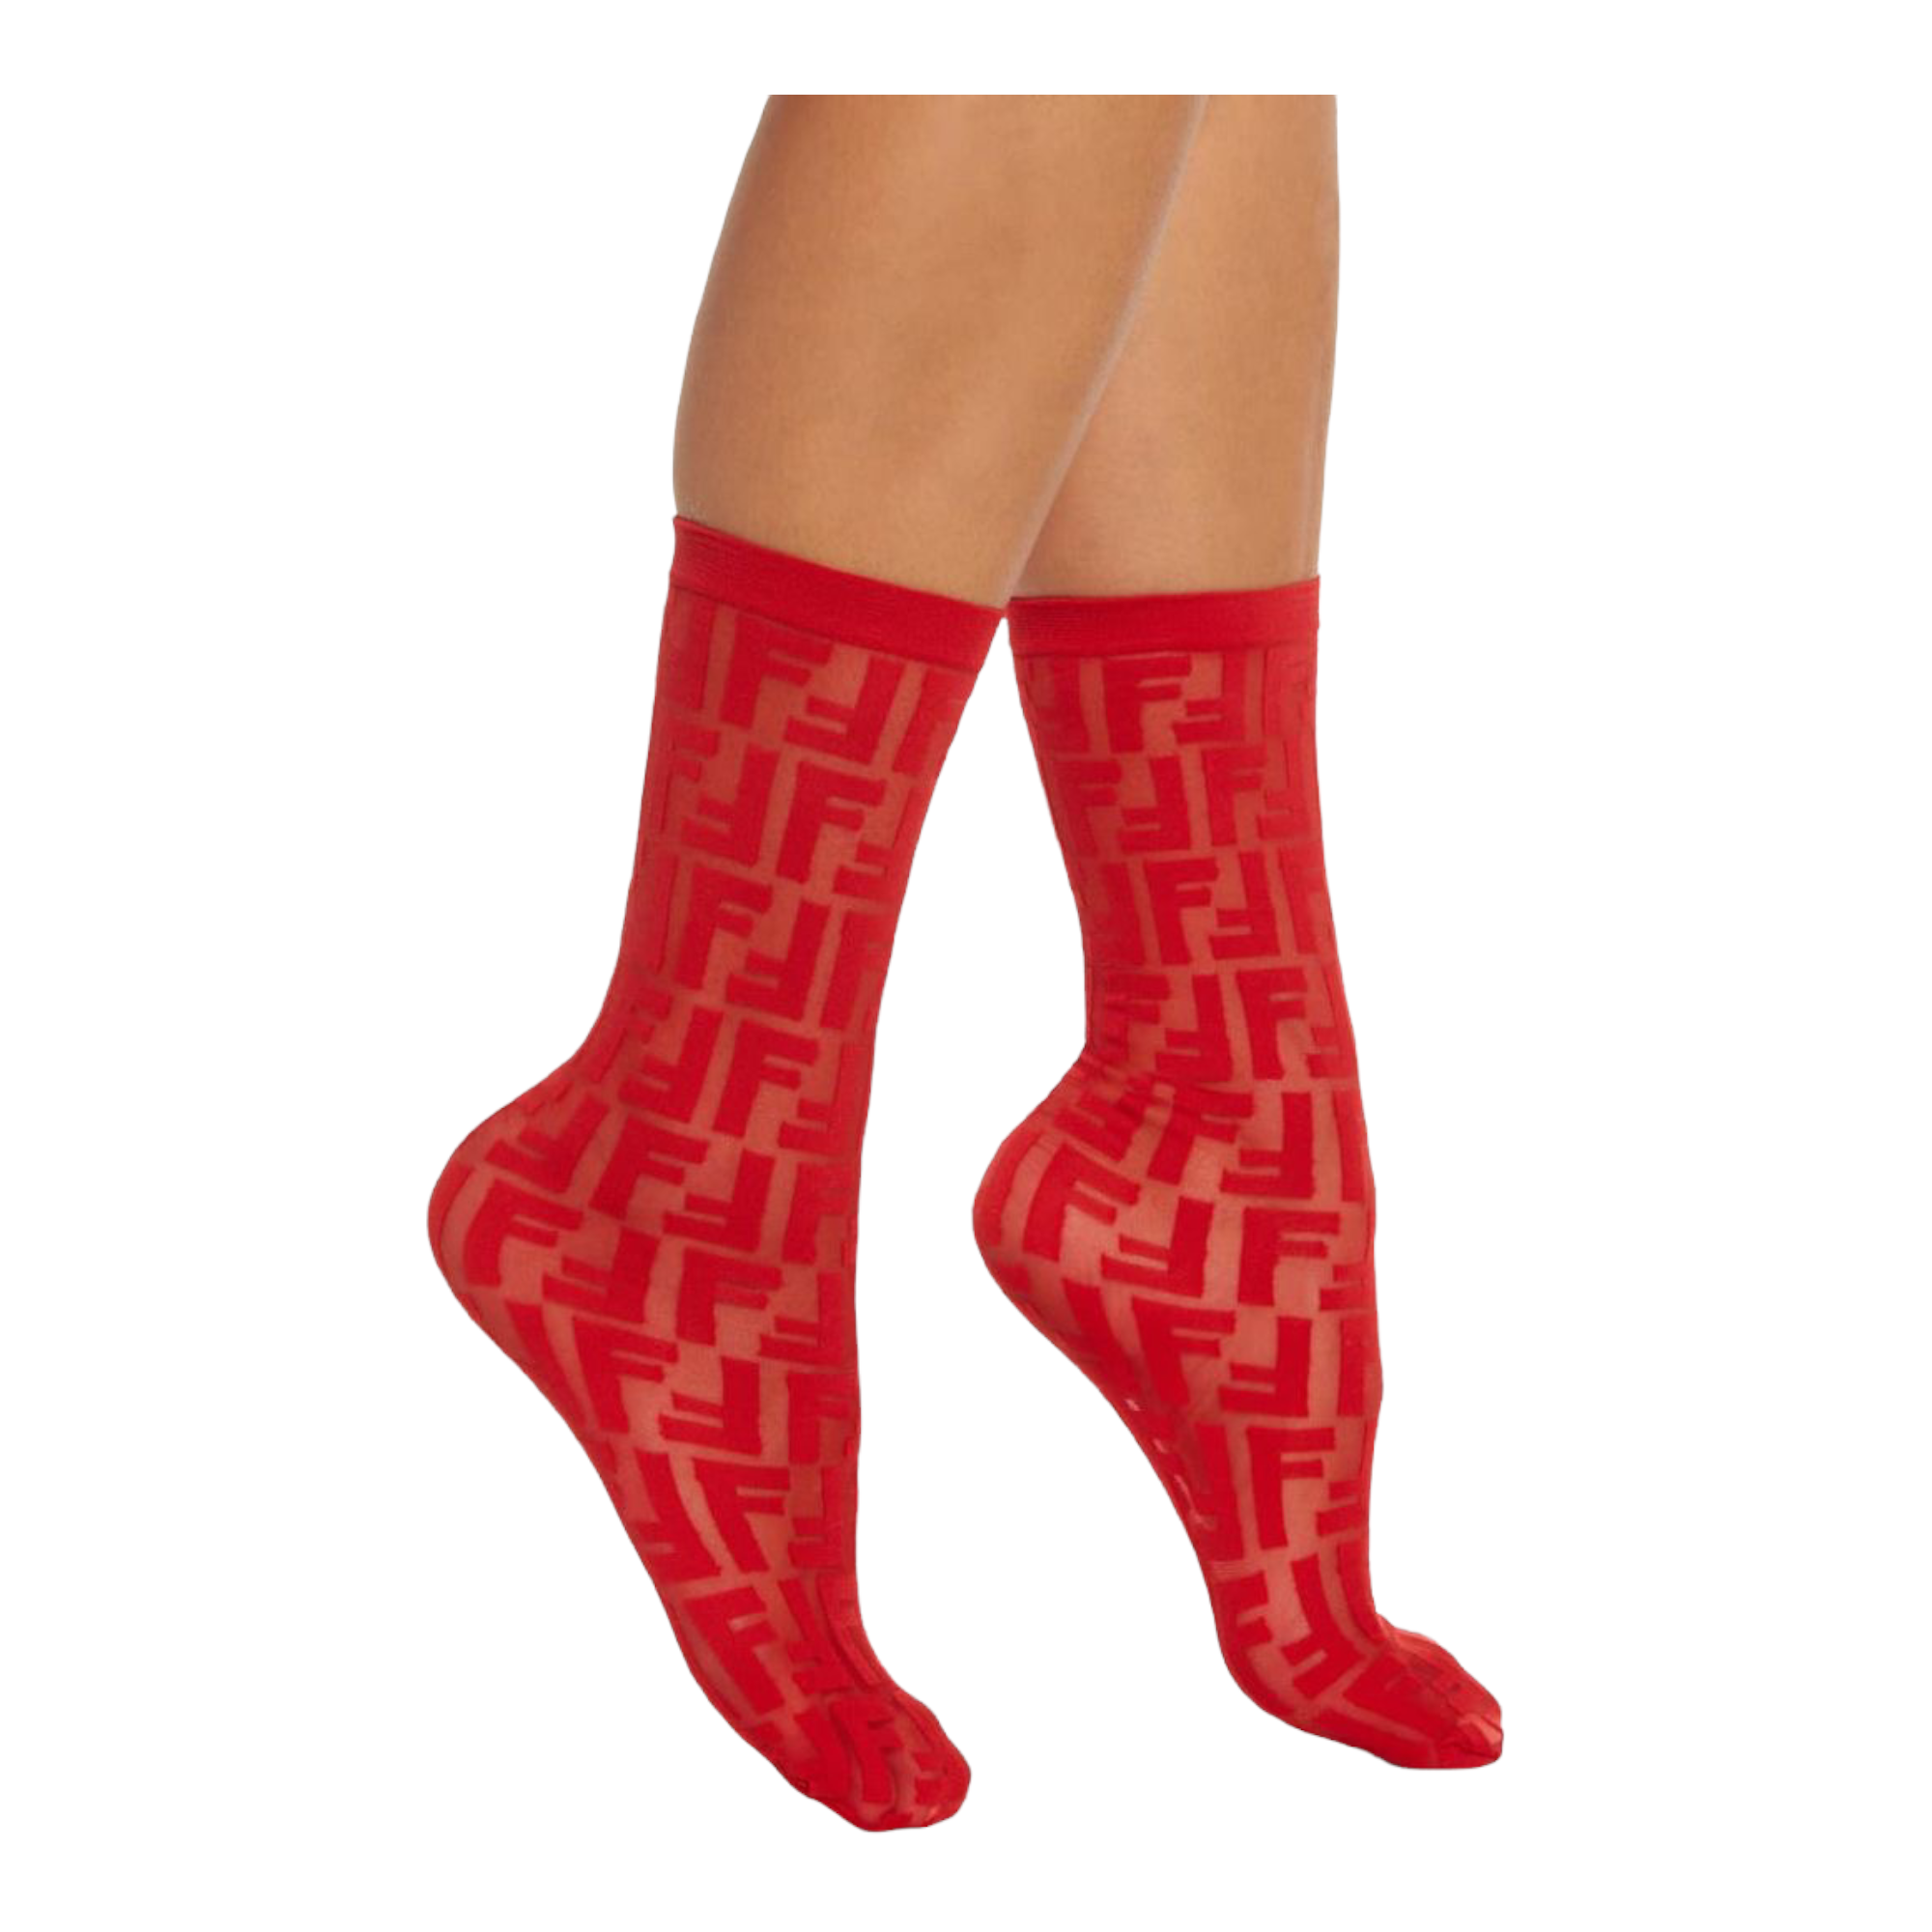 FF Inspired Stocking Socks - Red